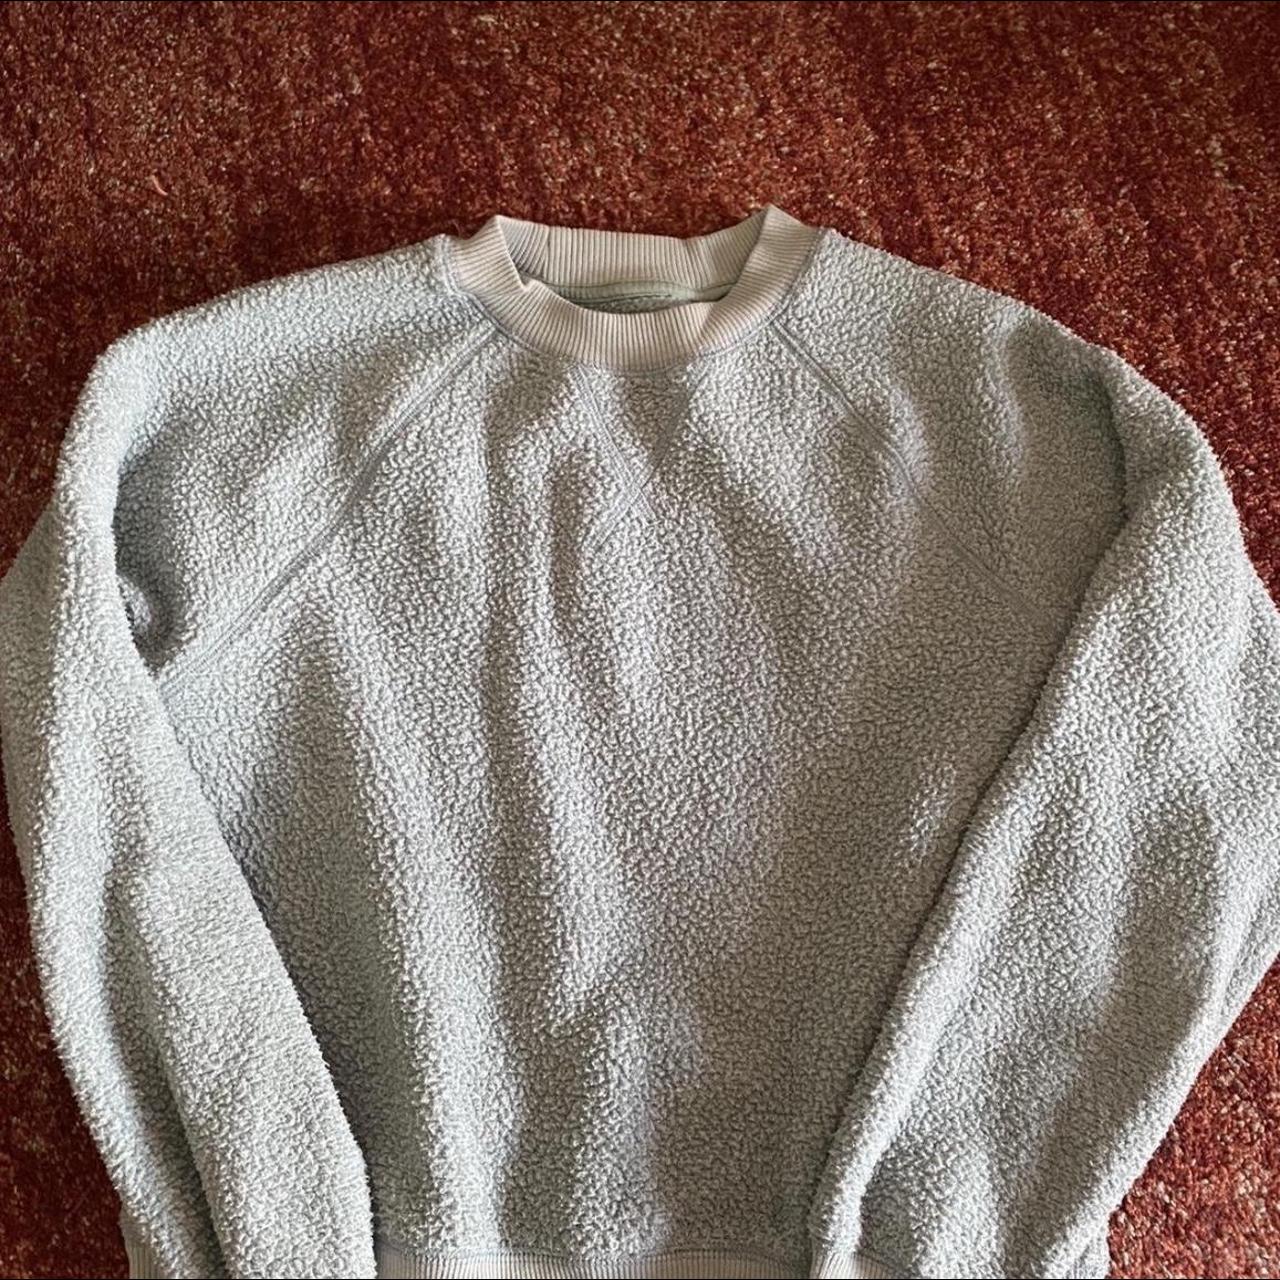 Everlane Fuzzy Sweatshirt Size Small Sold for $78... - Depop